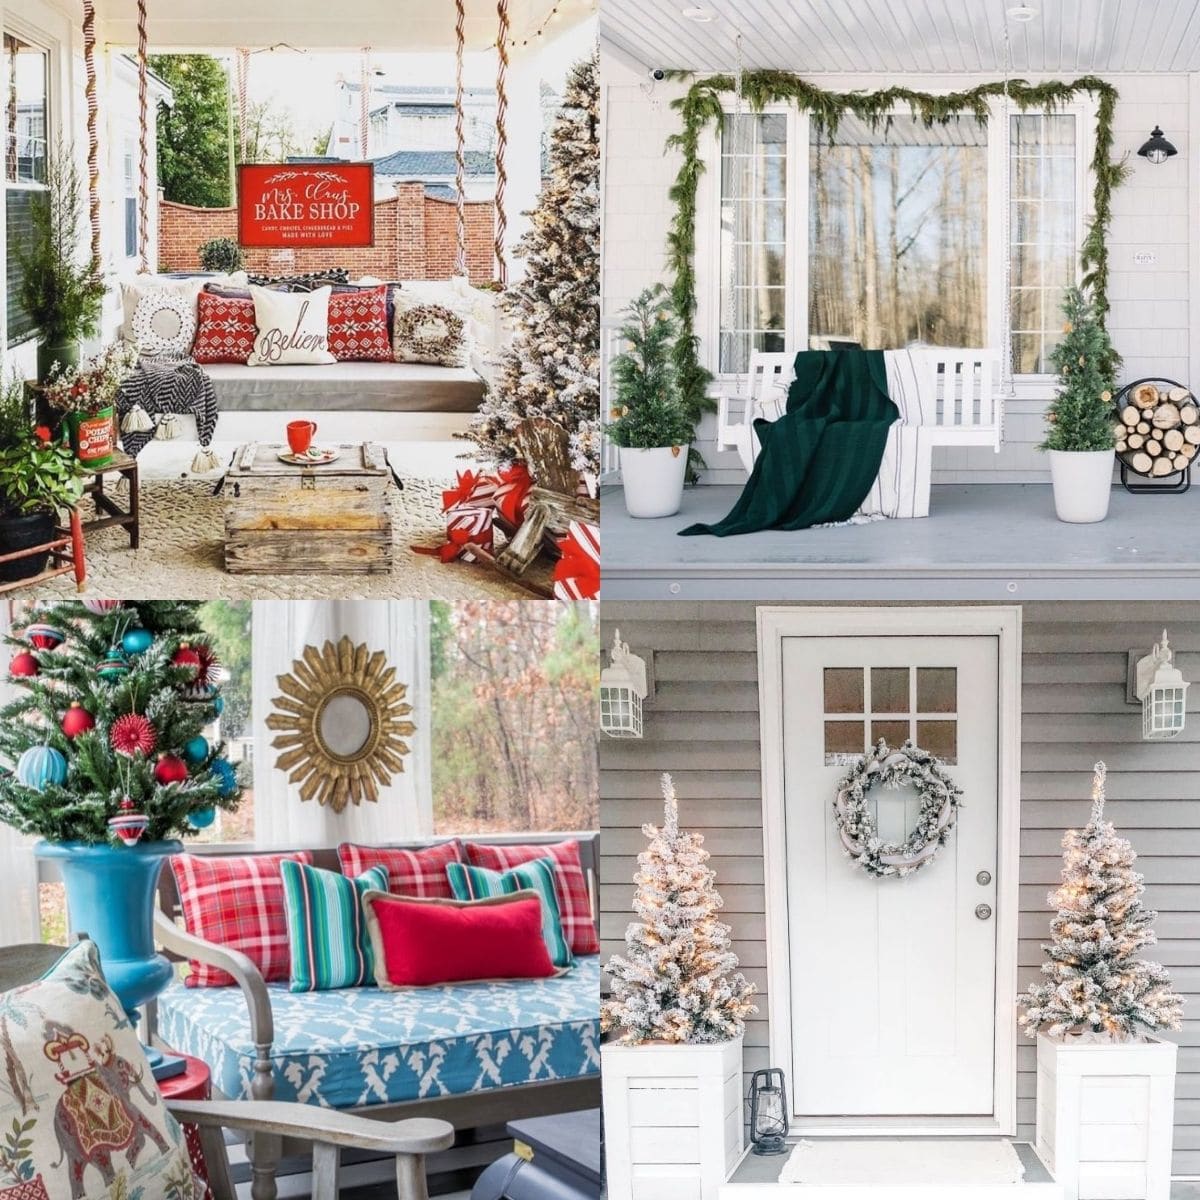 20 Christmas Porch Decorations - Craftsy Hacks